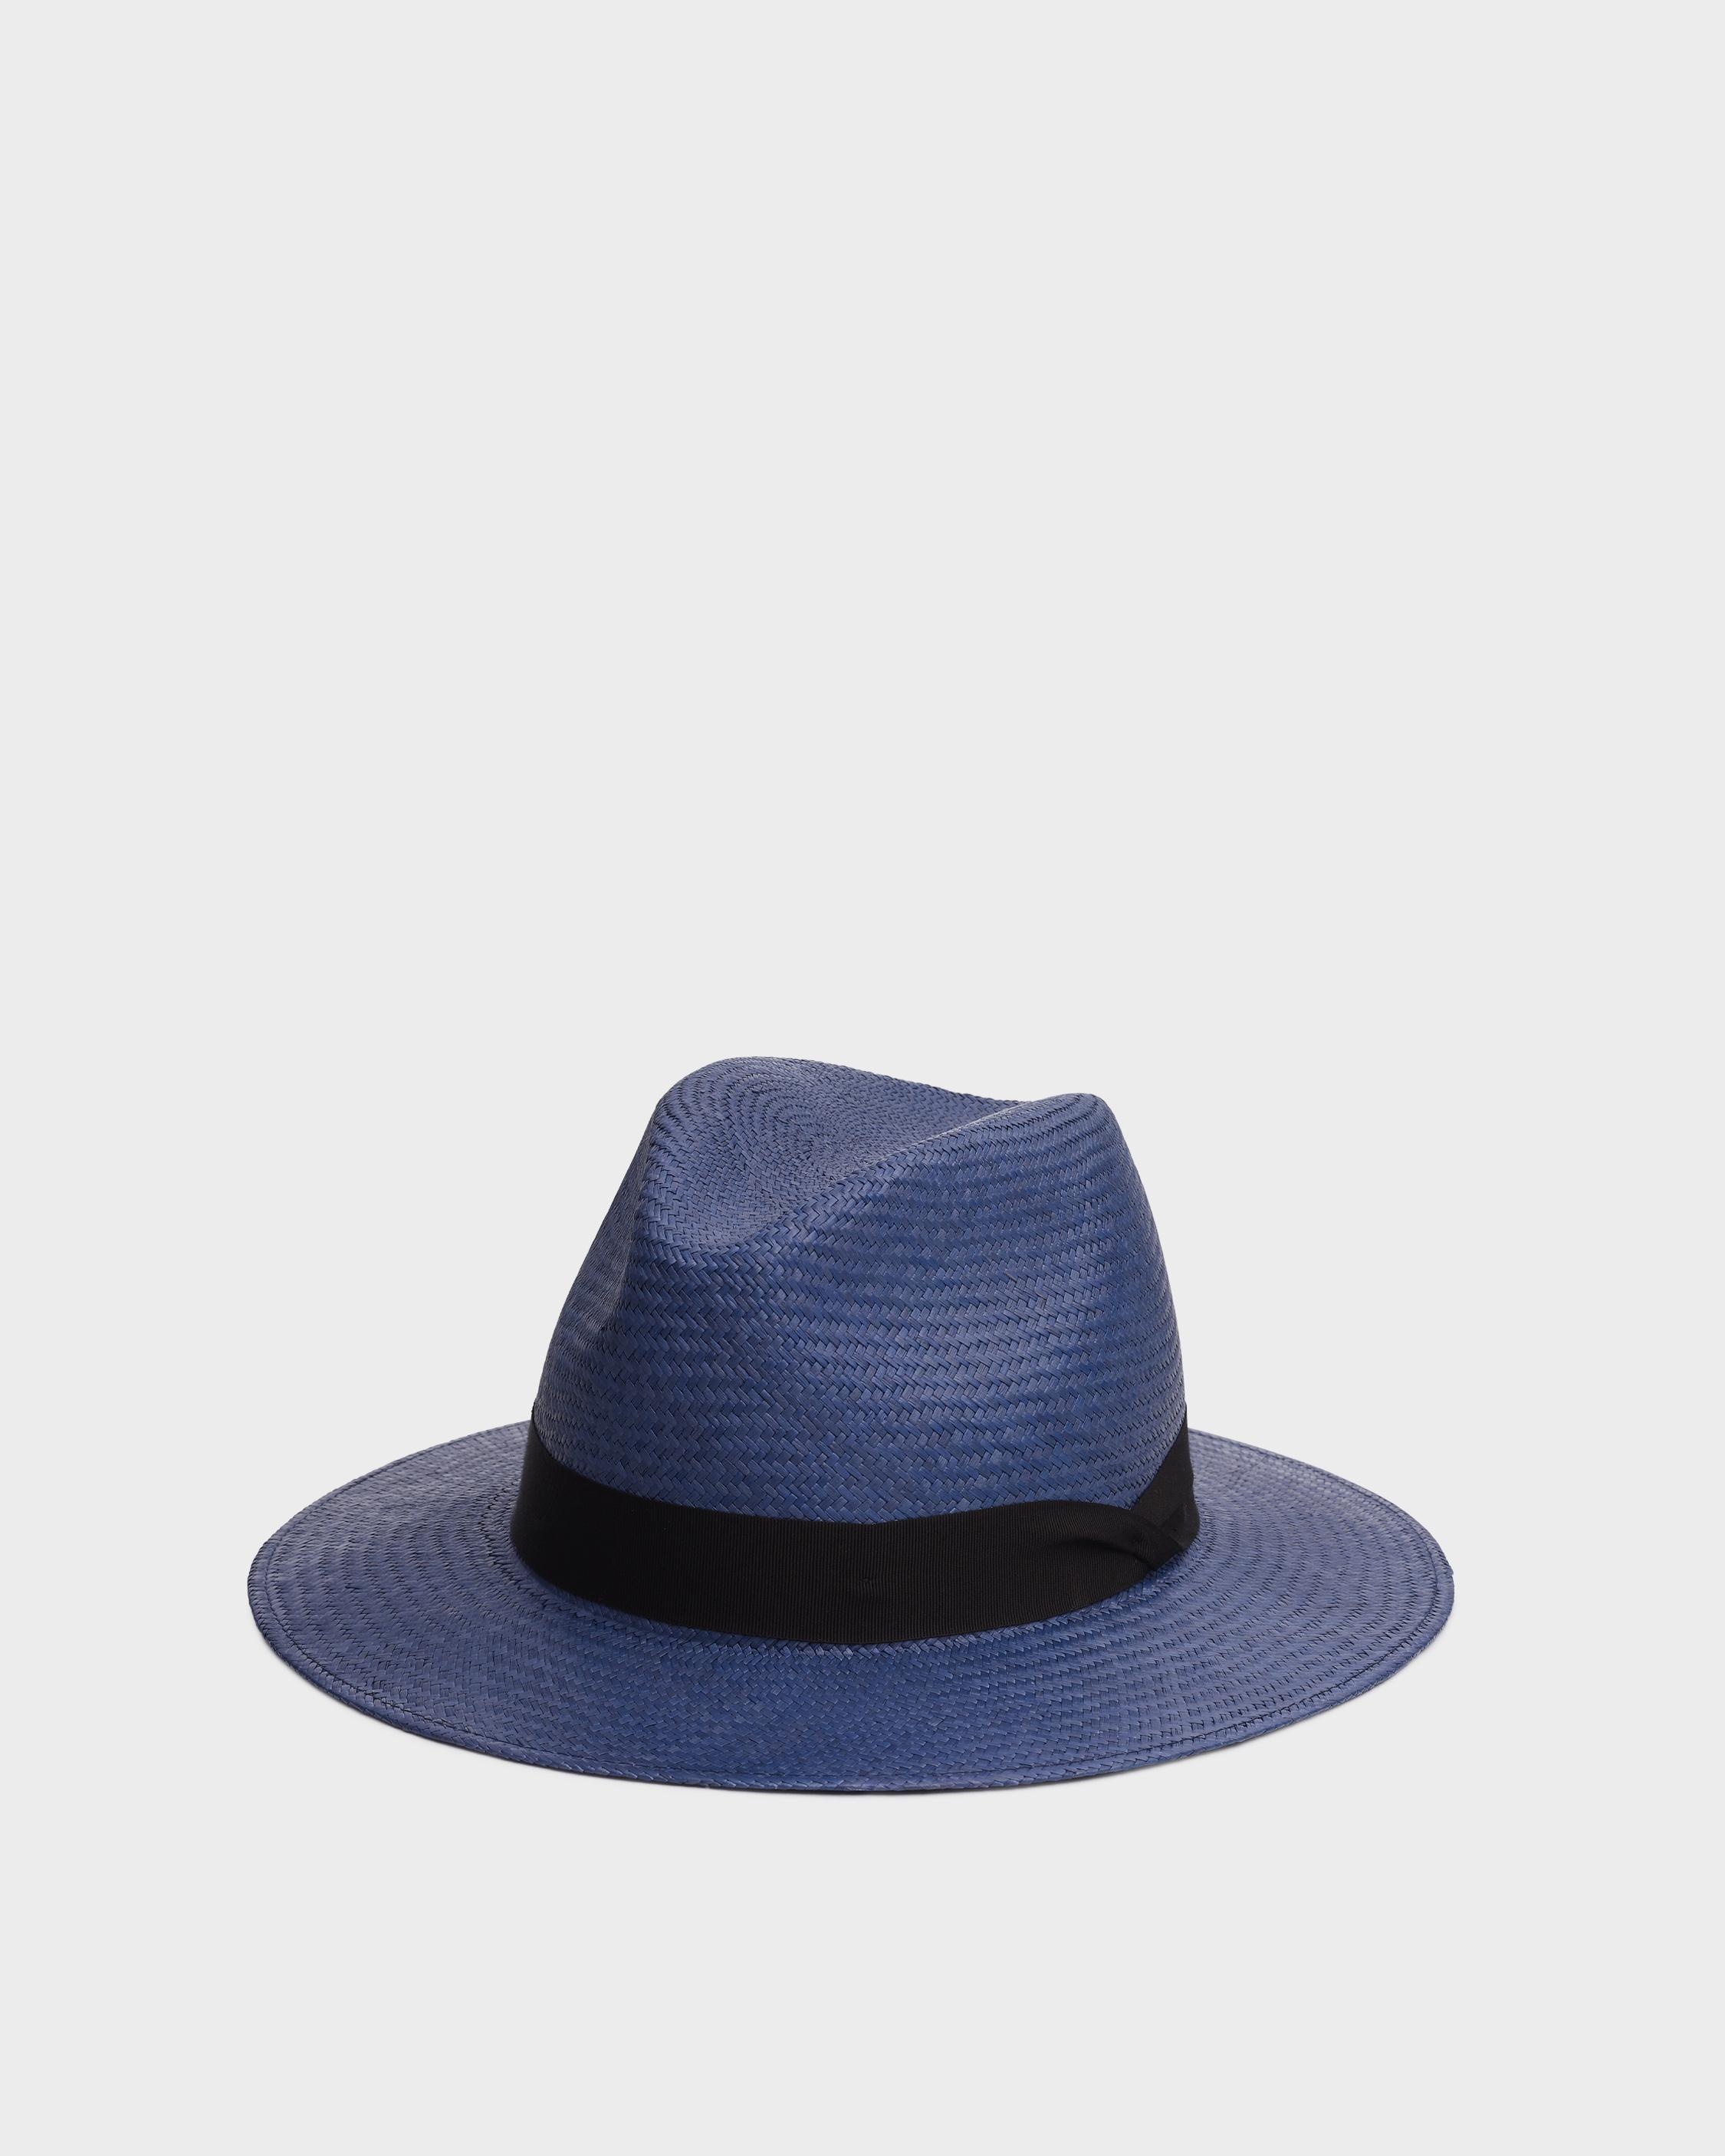 Panama Hat
Straw Hat - 1